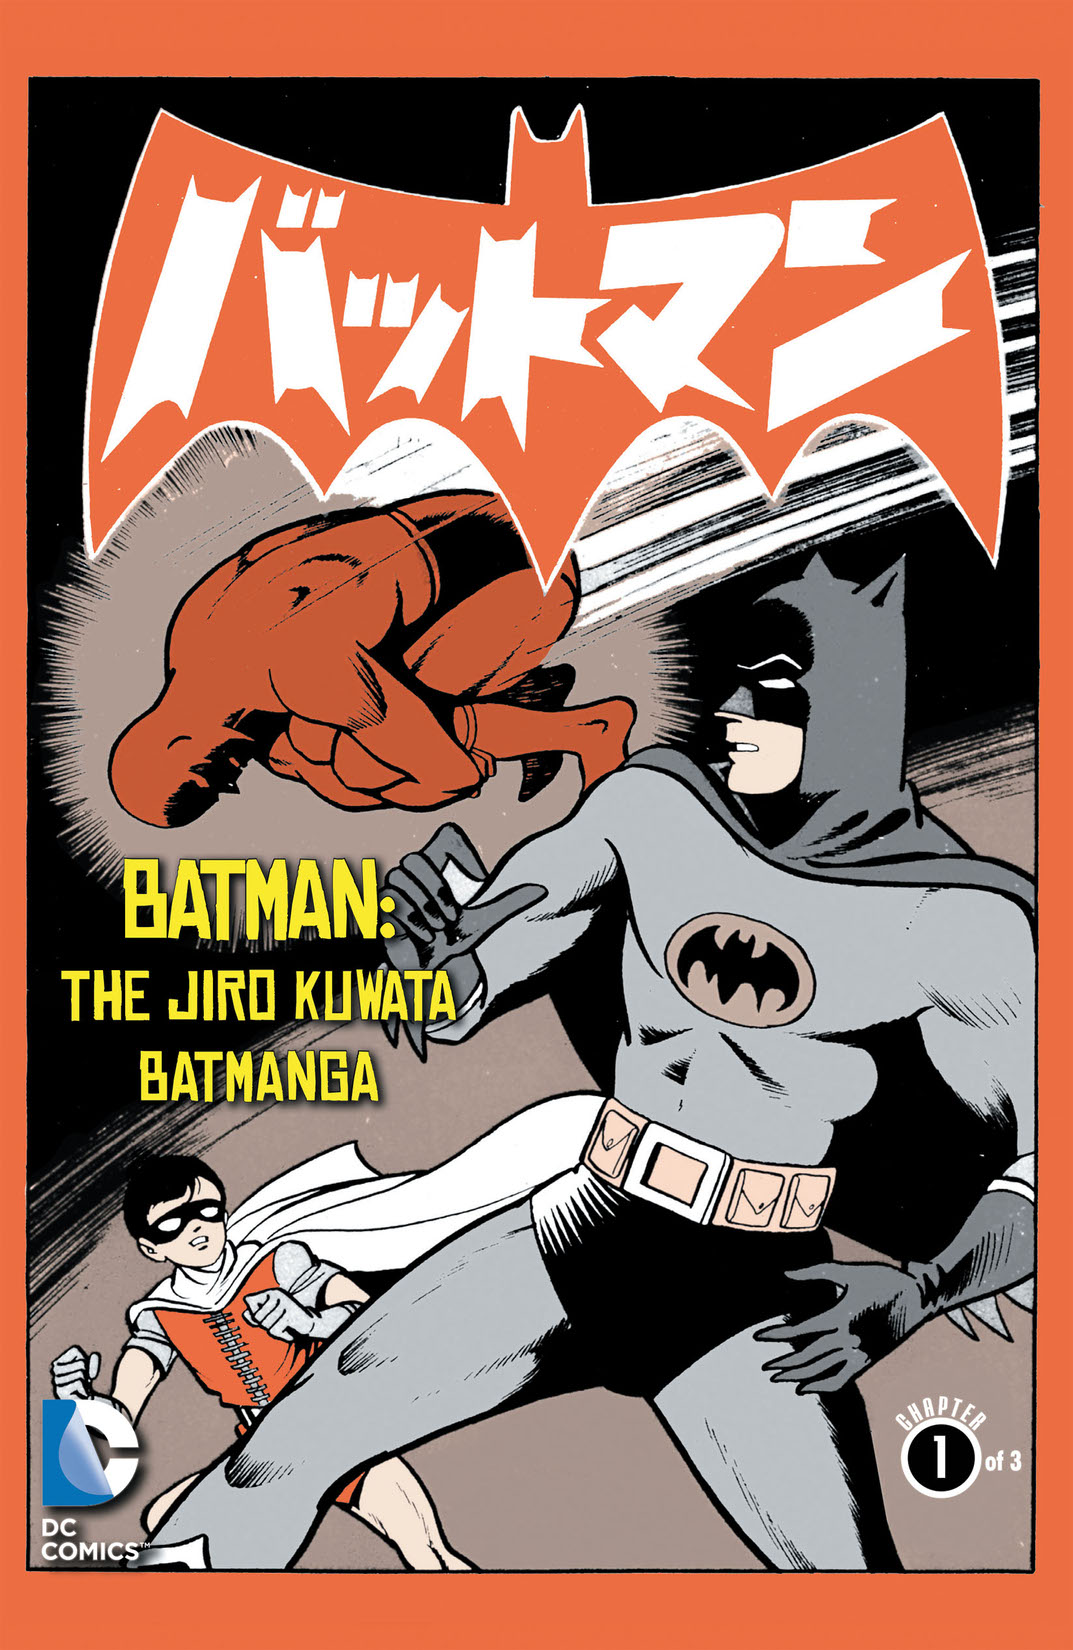 Batman: The Jiro Kuwata Batmanga #7 preview images